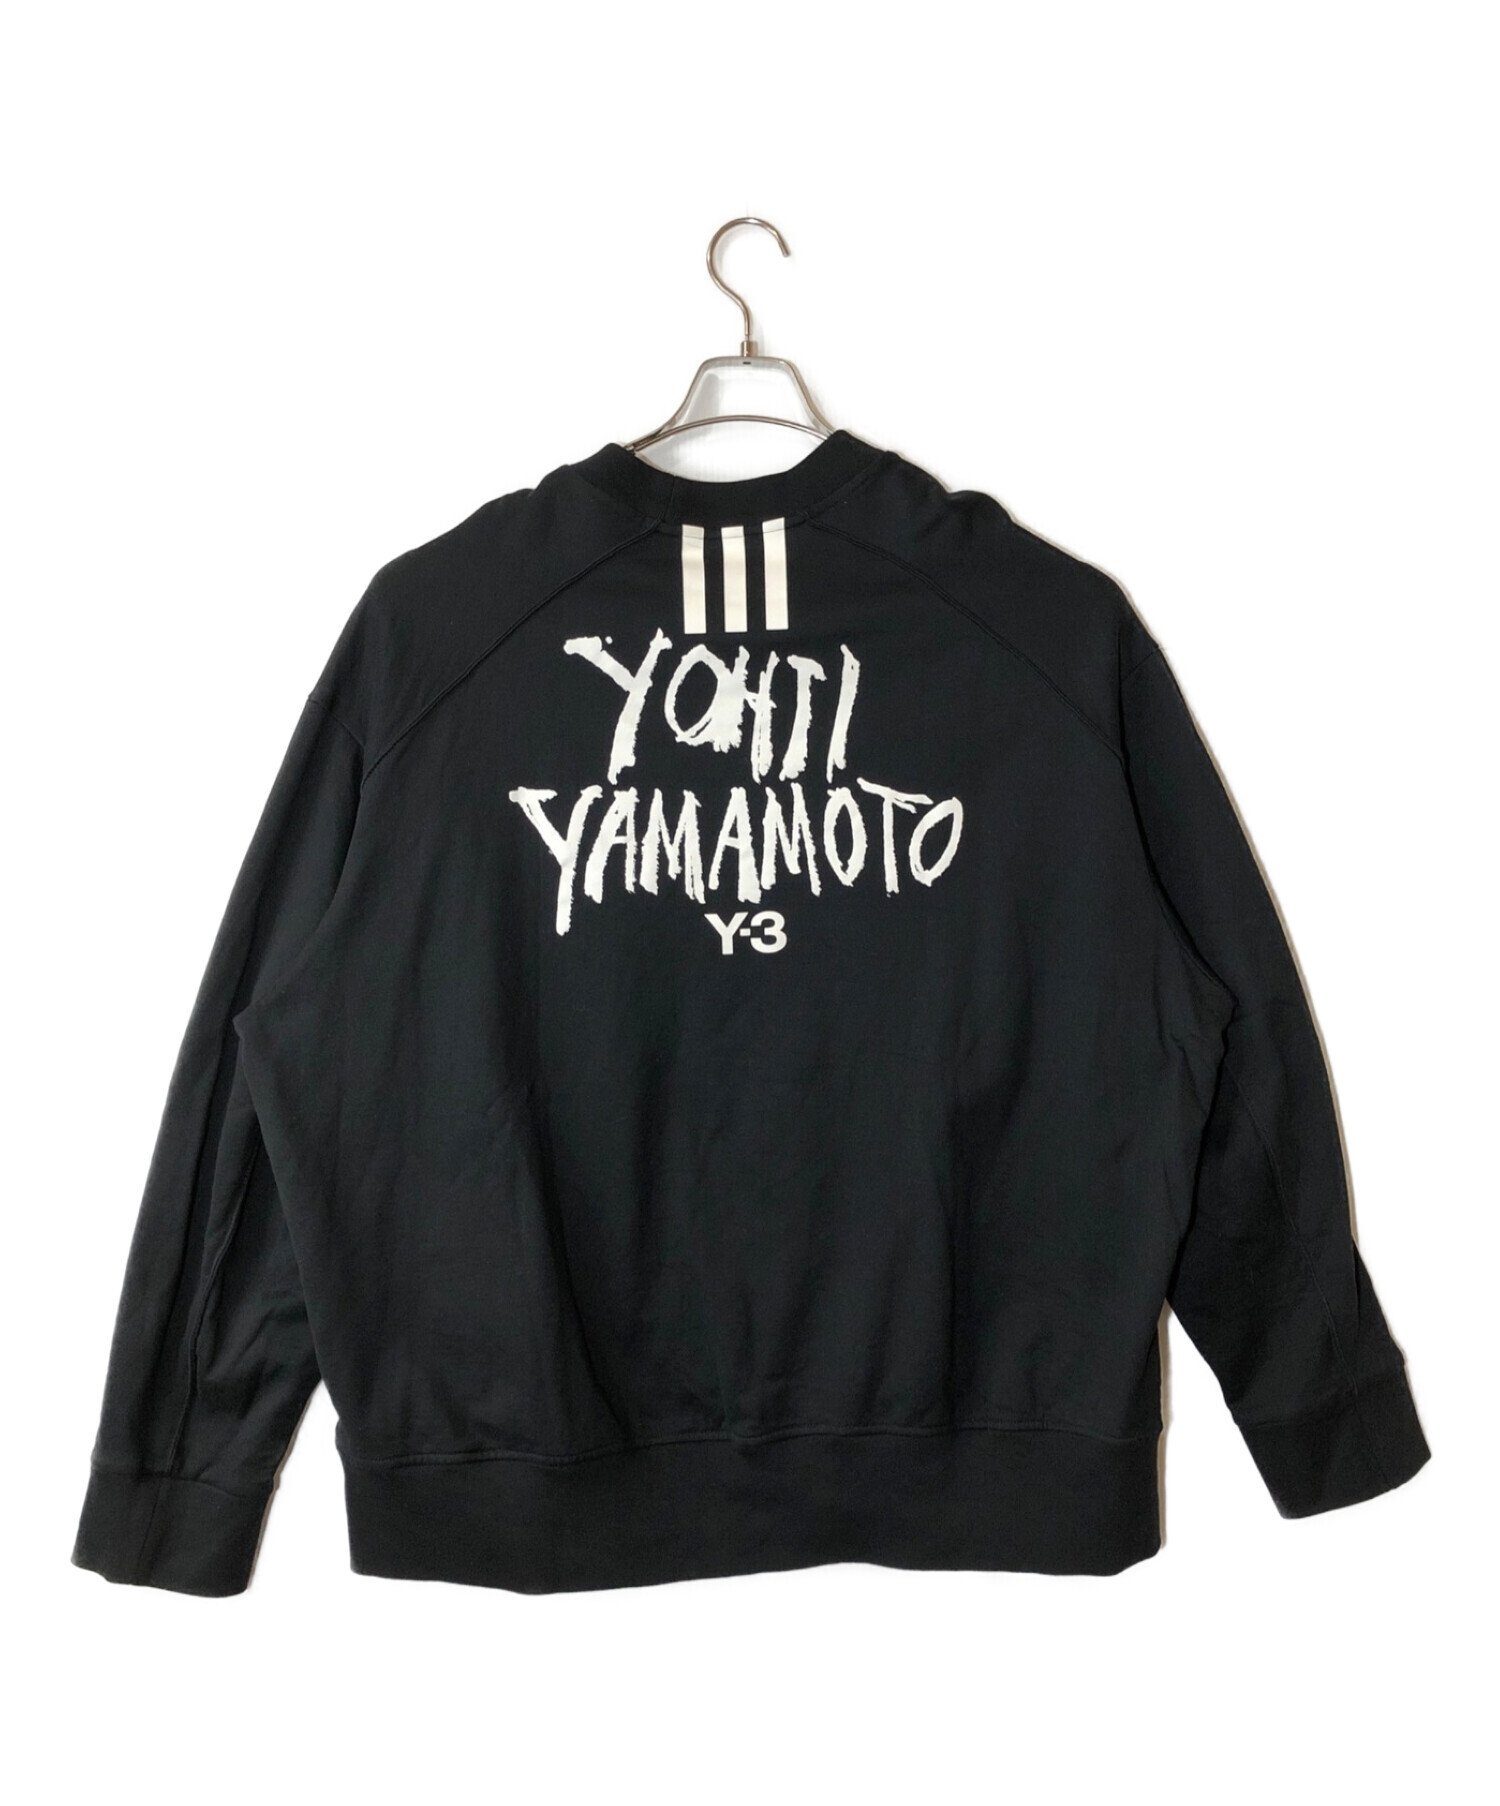 Y-3 (ワイスリー) Signature Graphic Sweatshirt ブラック サイズ:XL